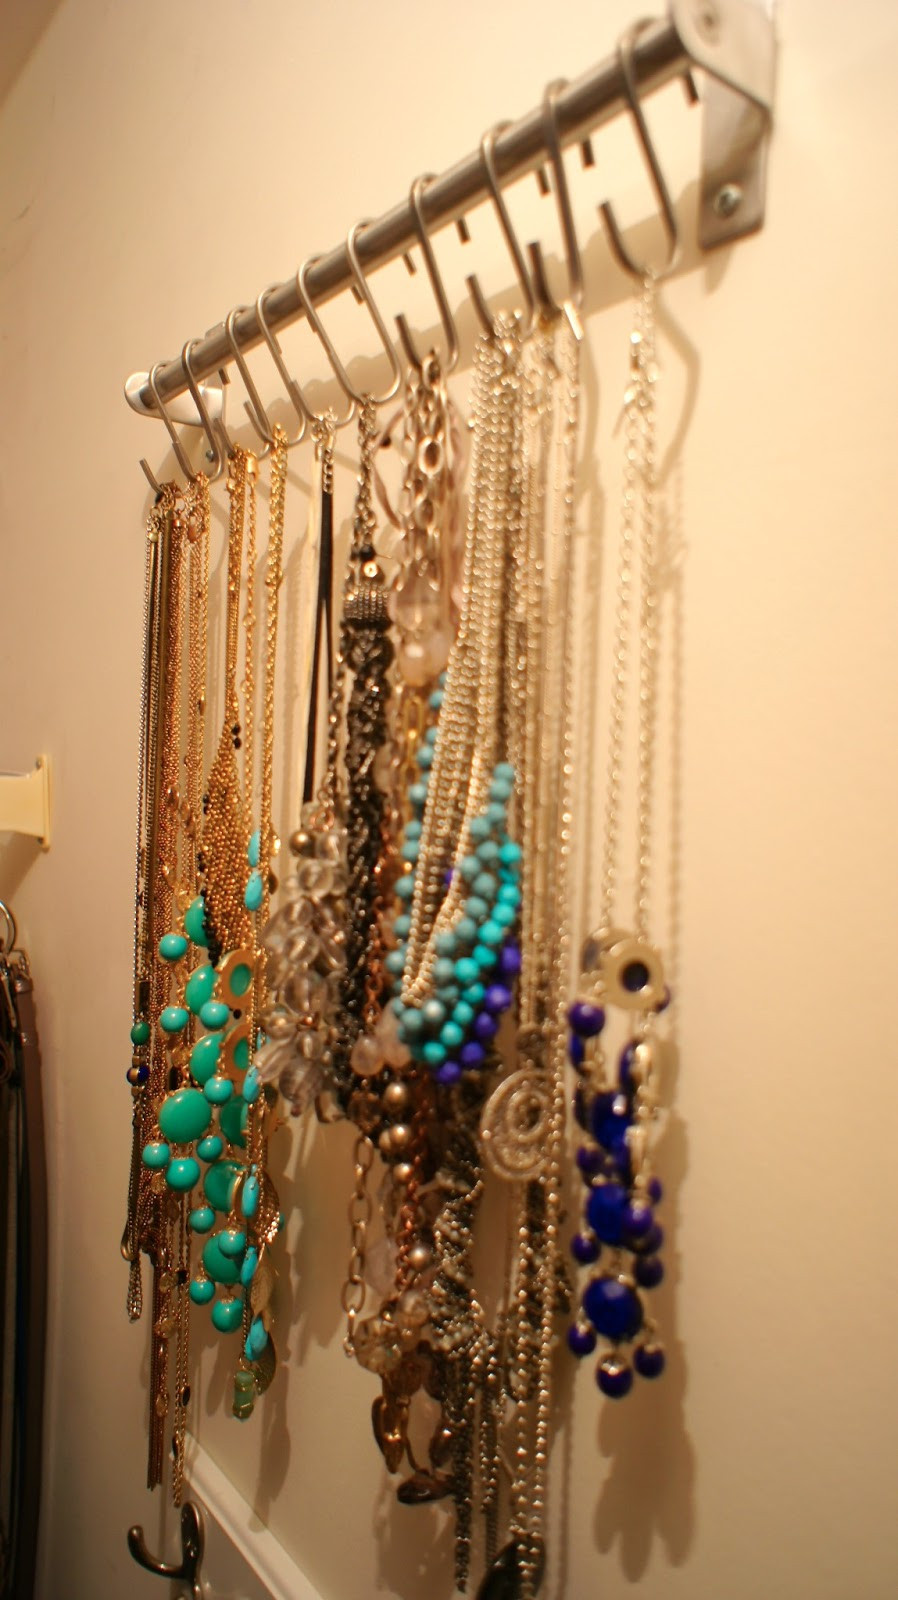 DIY Jewelry Rack
 Food Fashion Home Necklace Organizer System